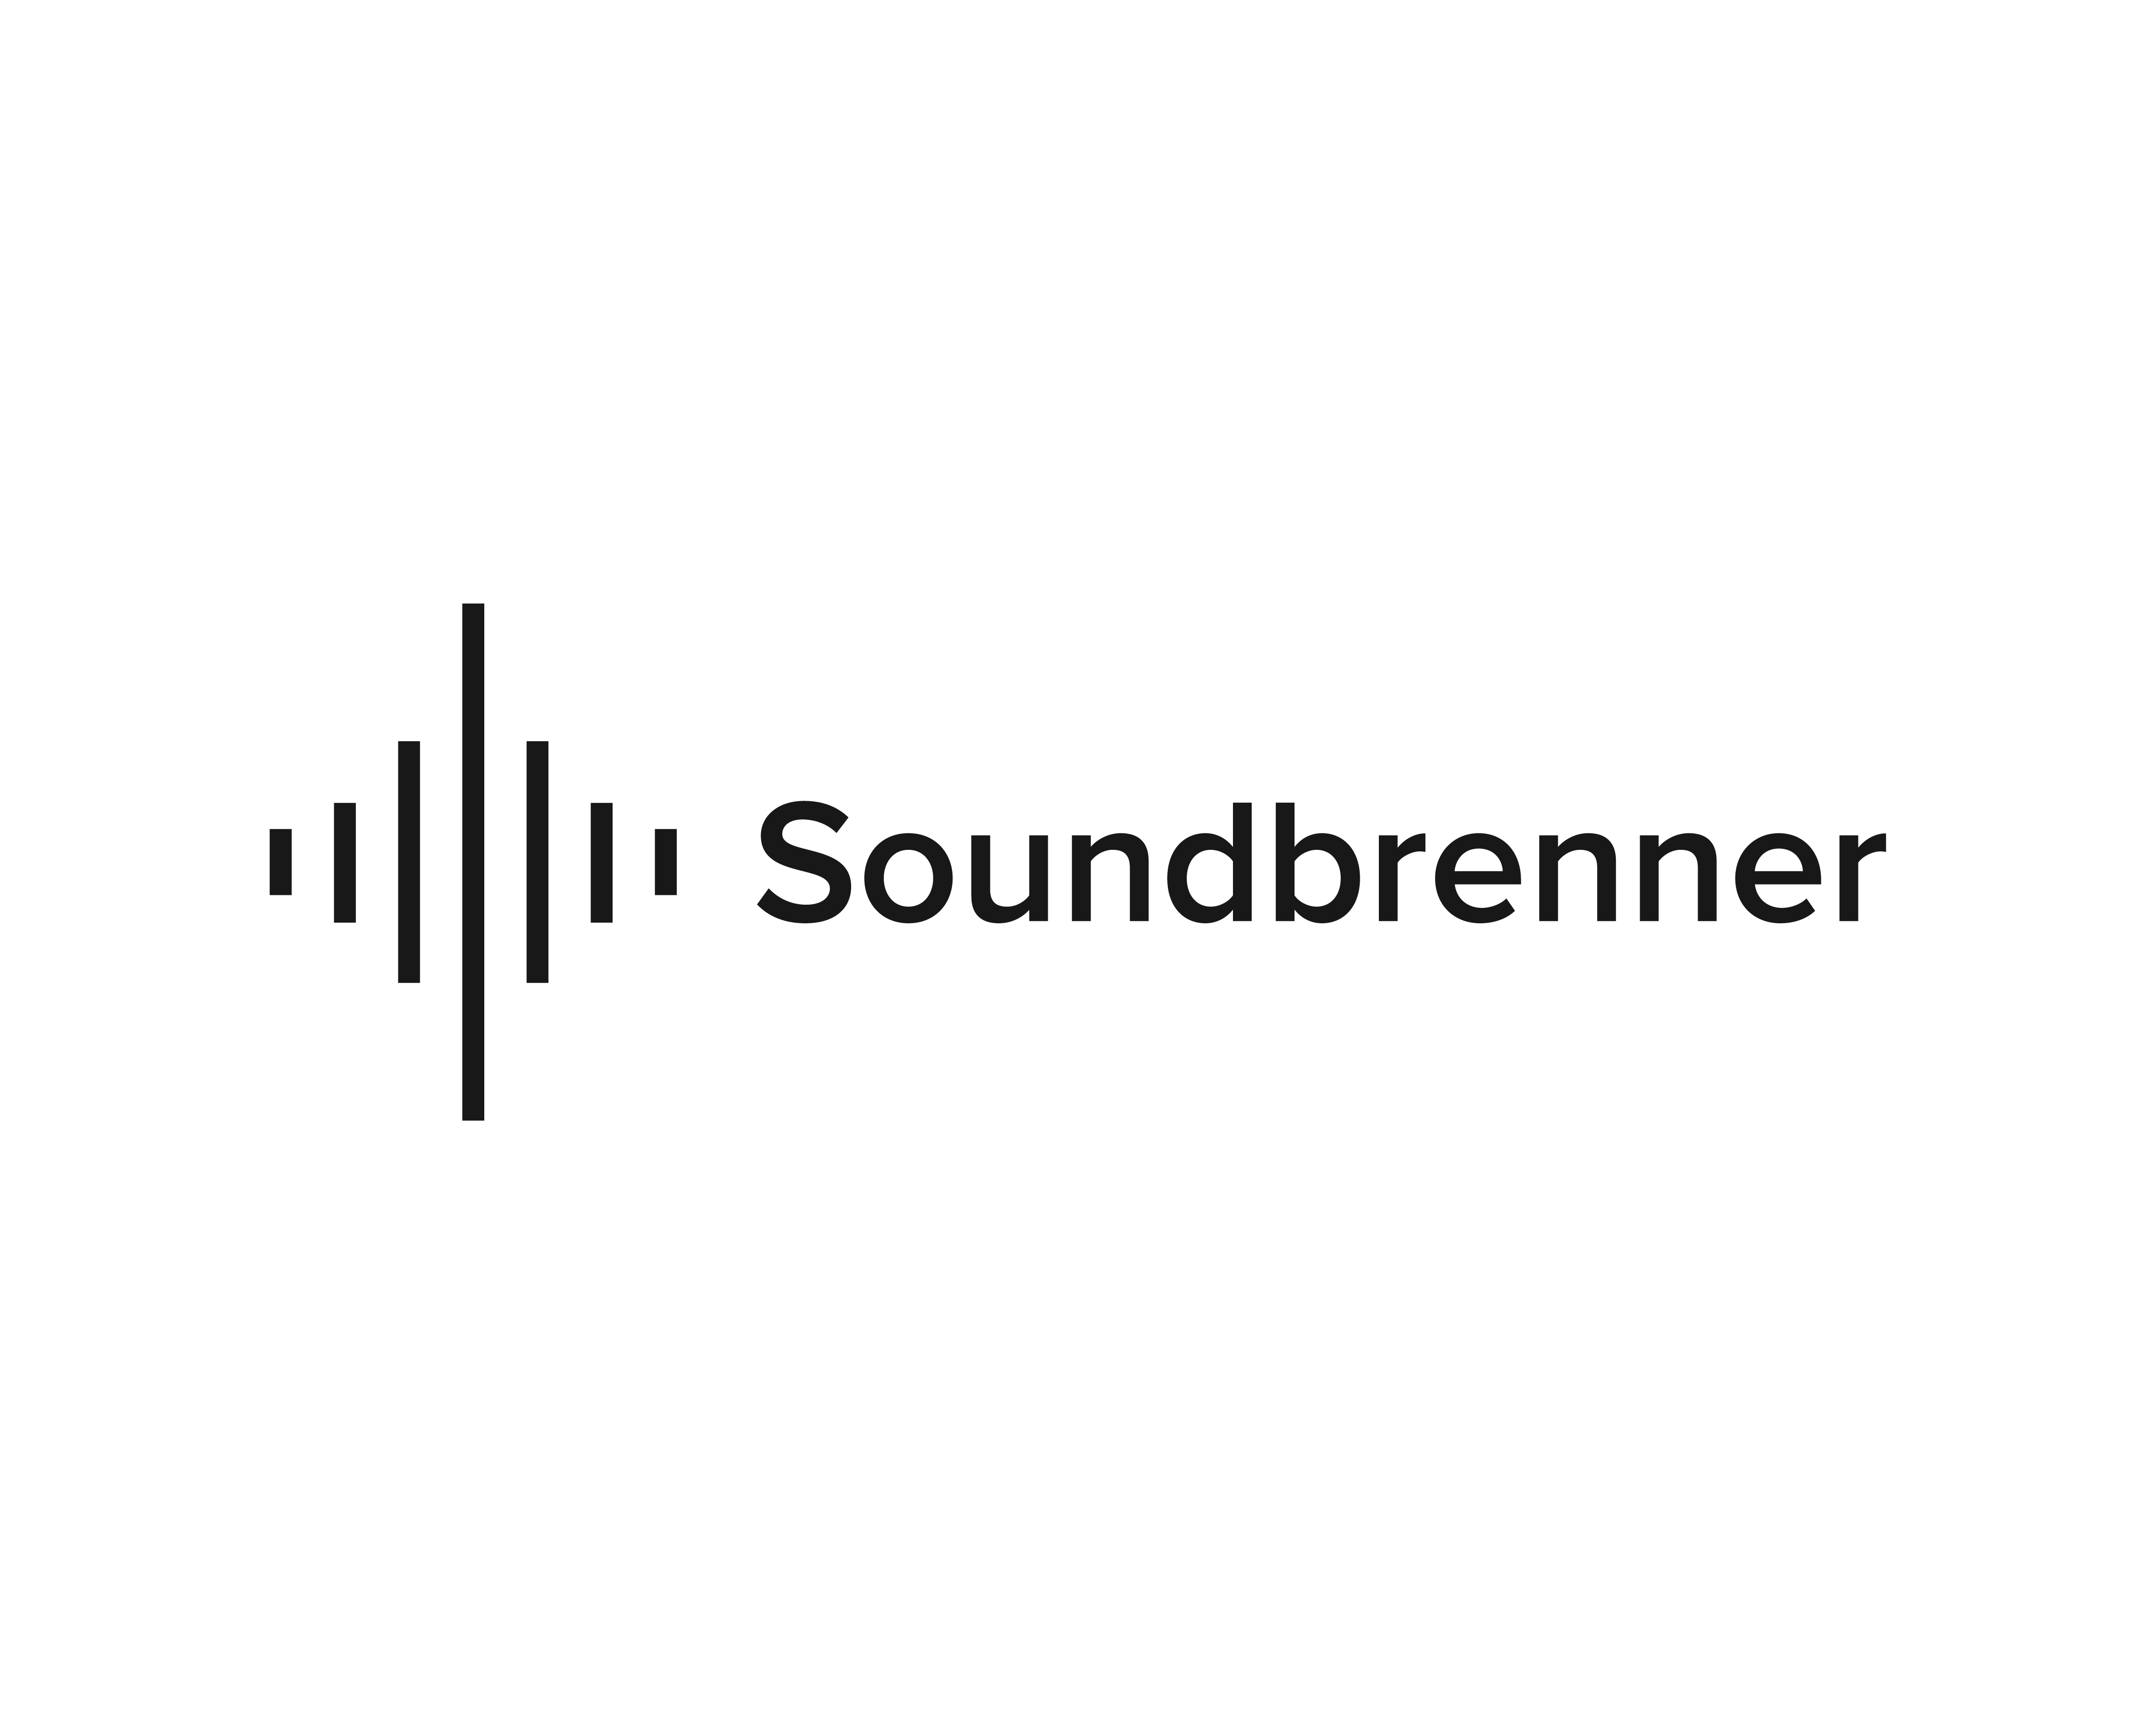 Soundbrenner logo